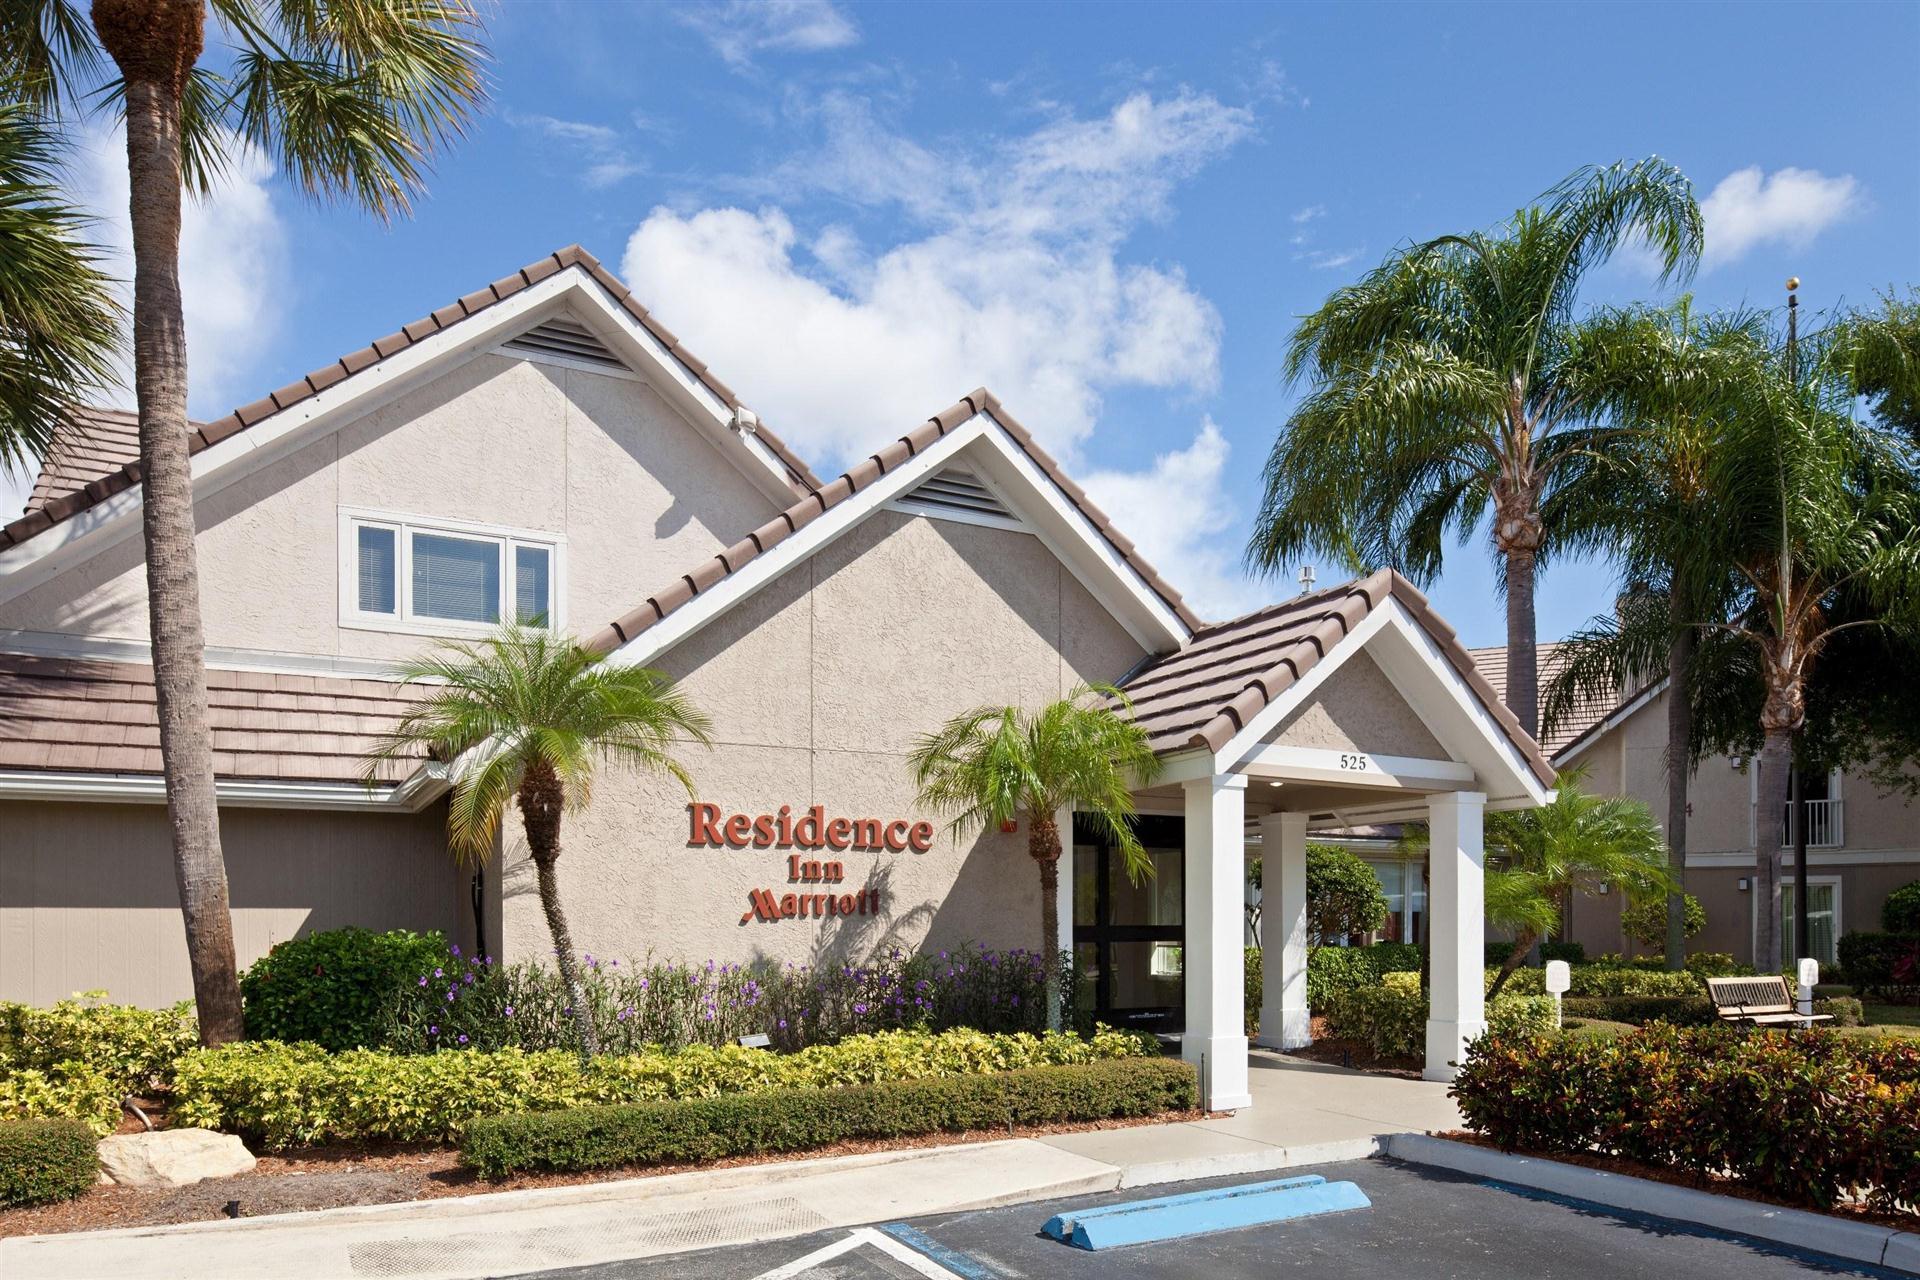 Residence Inn Boca Raton in Boca Raton, FL